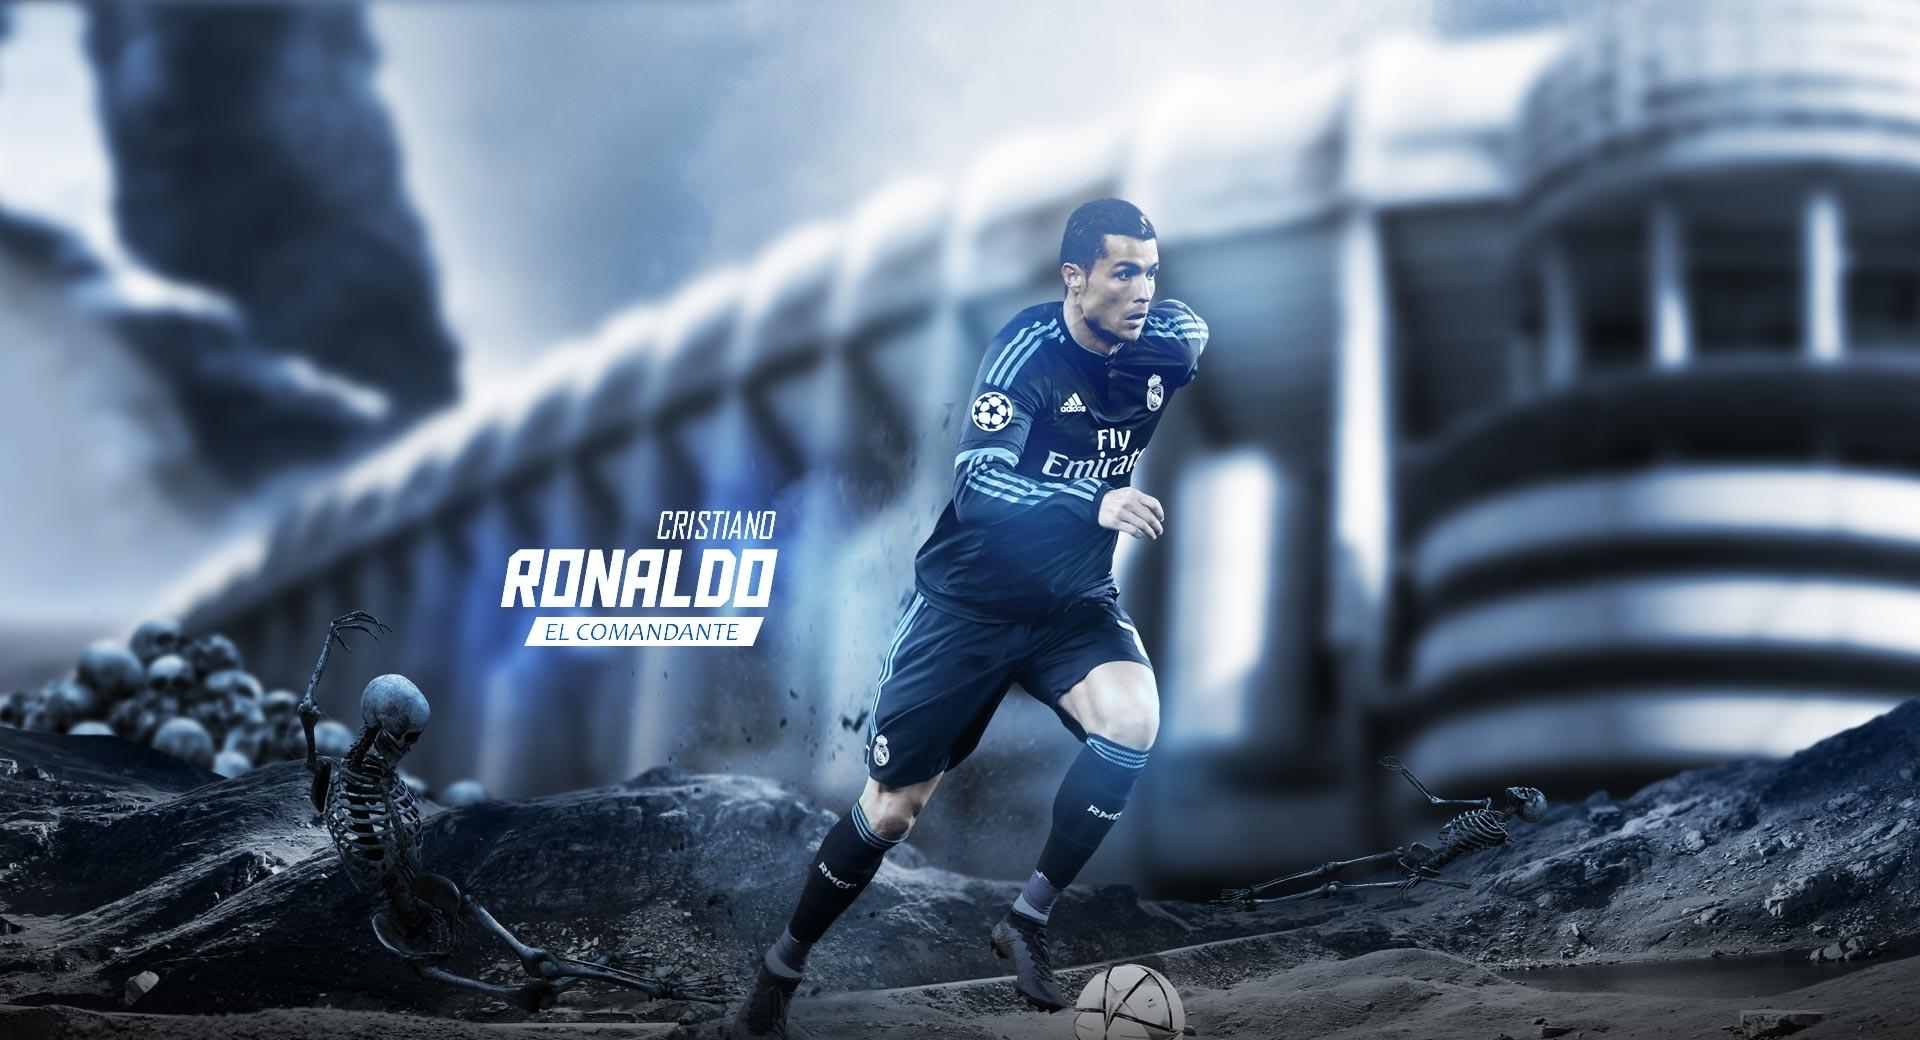 Cristiano Ronaldo - El Comandante at 750 x 1334 iPhone 6 size wallpapers HD quality